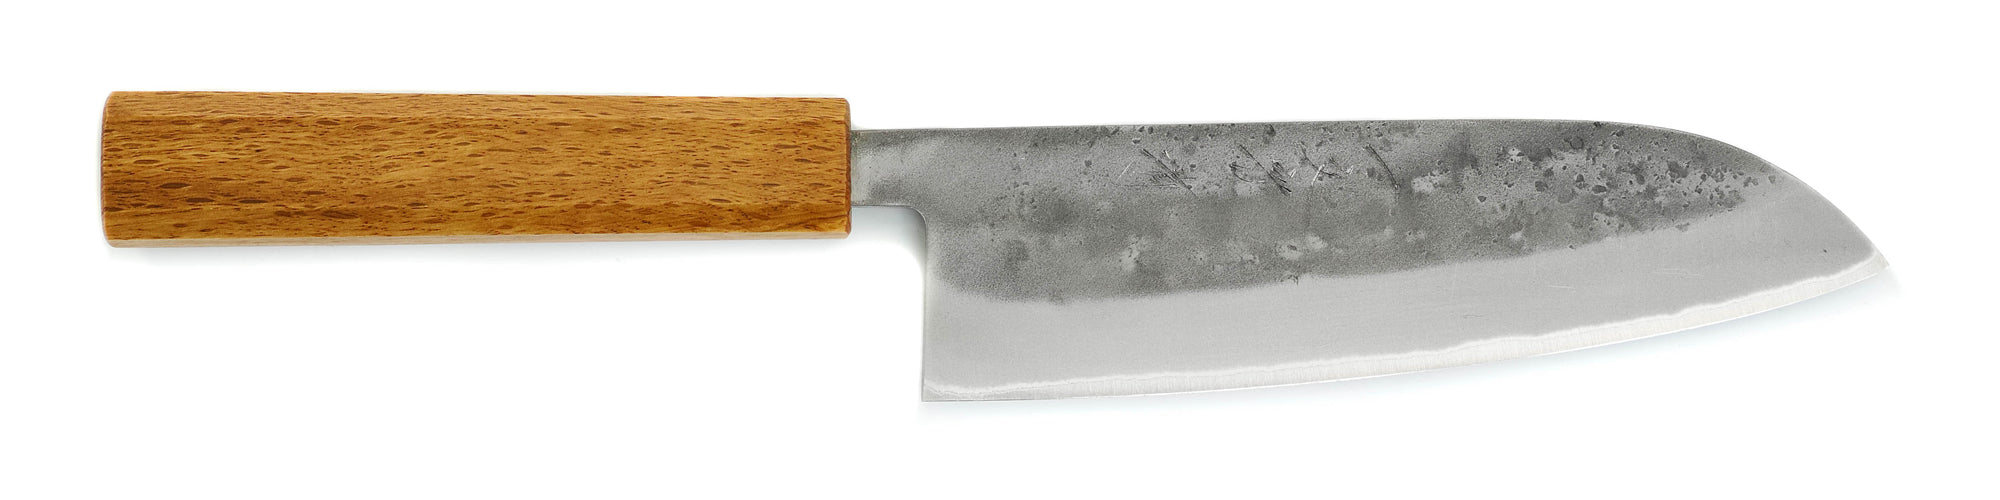 Japanese Knife made in Japan